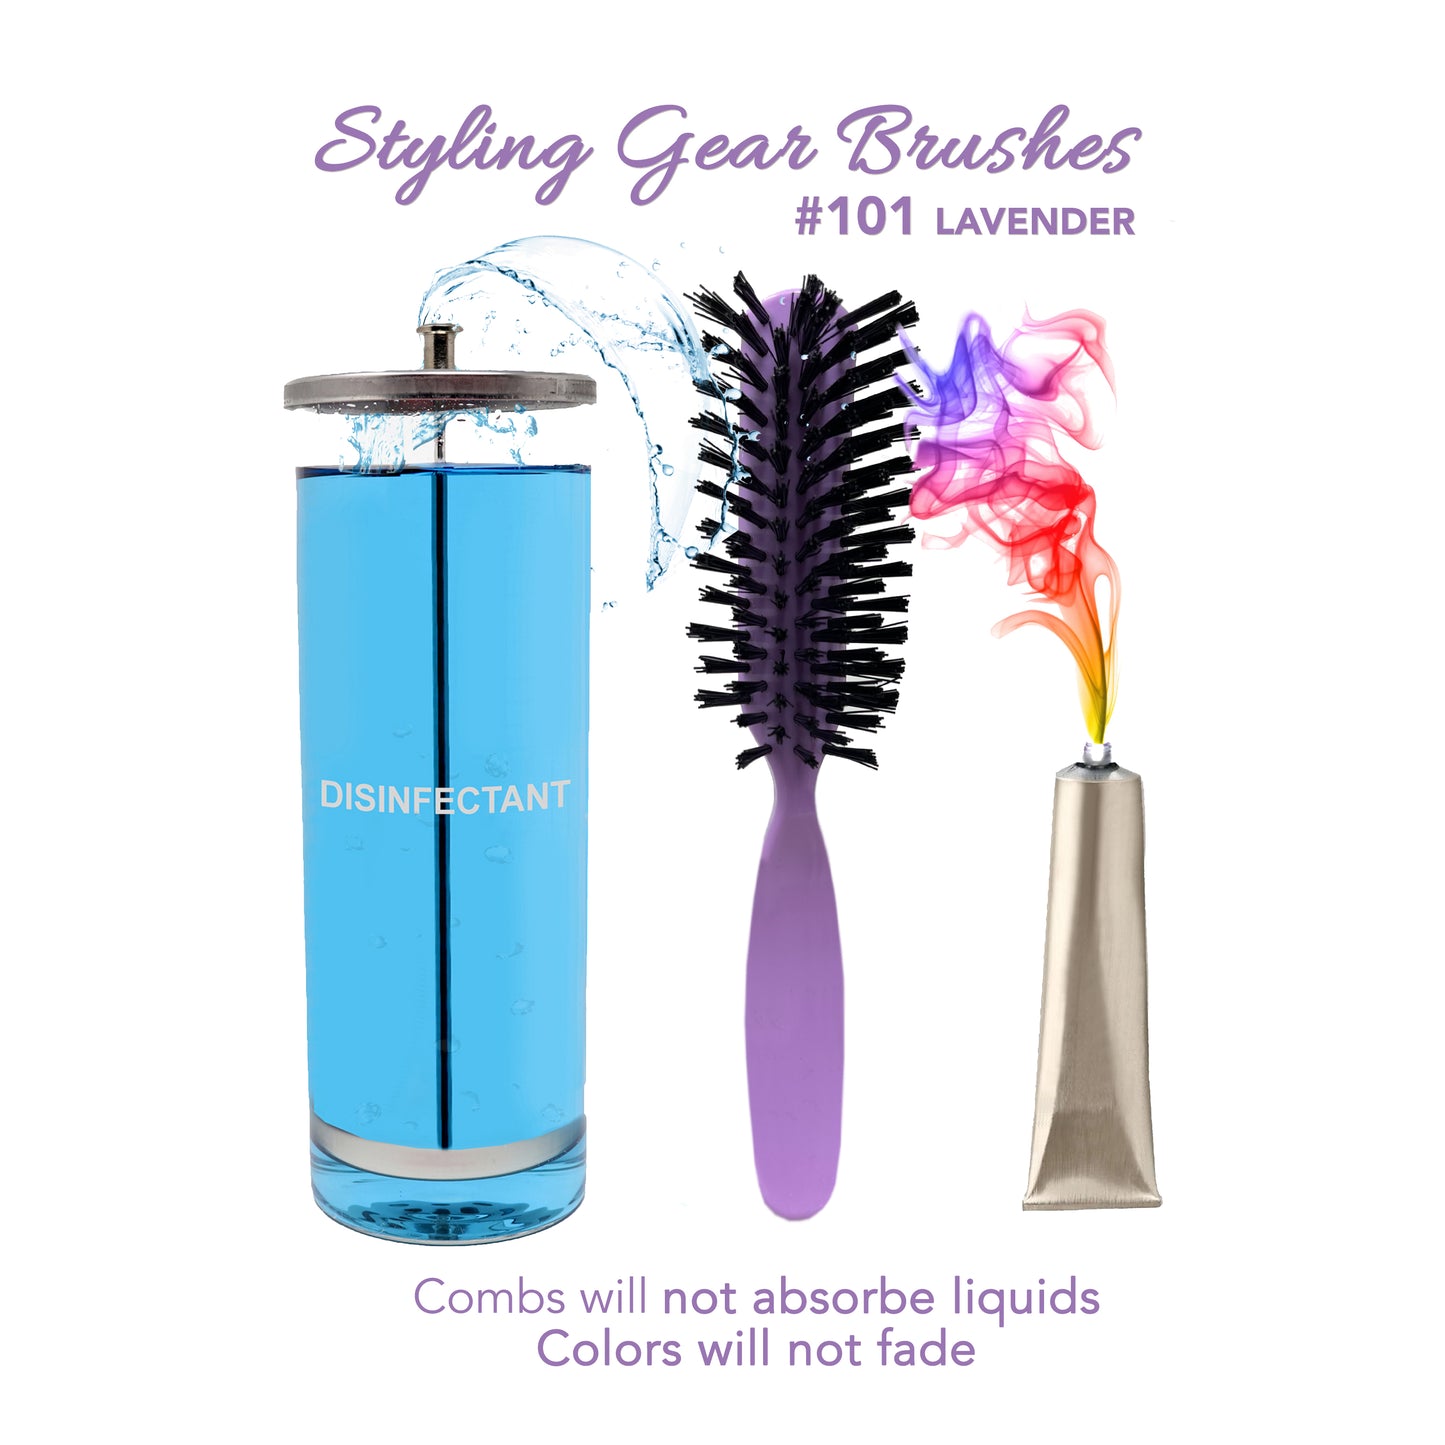 Styling Gear Detangling Hair Brush Nylon Bristles 7 Row Teasing Womens Brush For Thick Hair 2 pc.